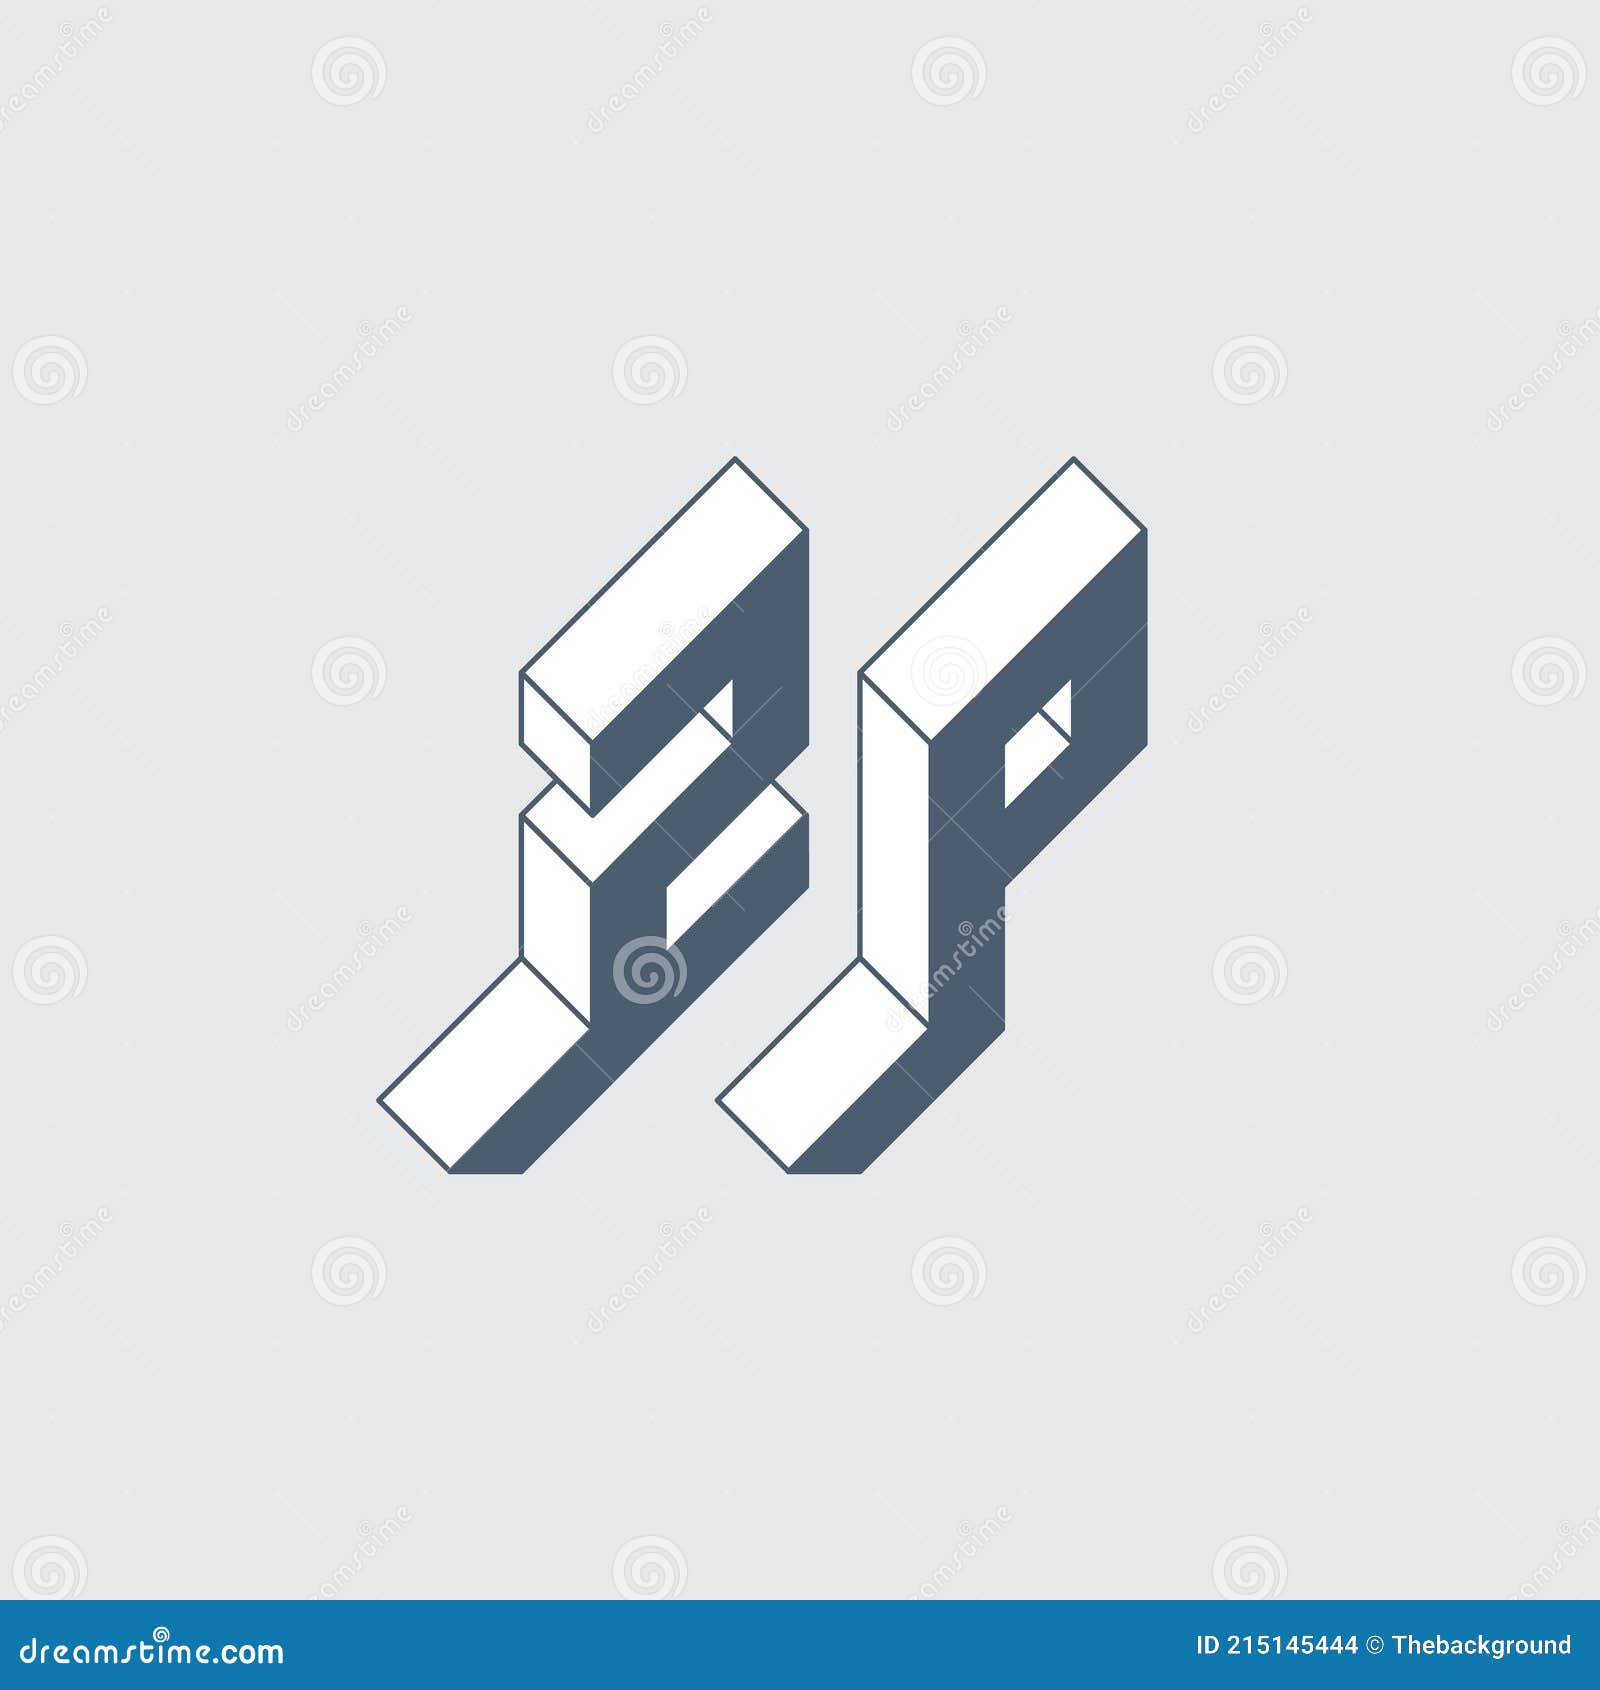 MM - Logo or 2-letter Code. Isometric 3d Font for Design. Letters